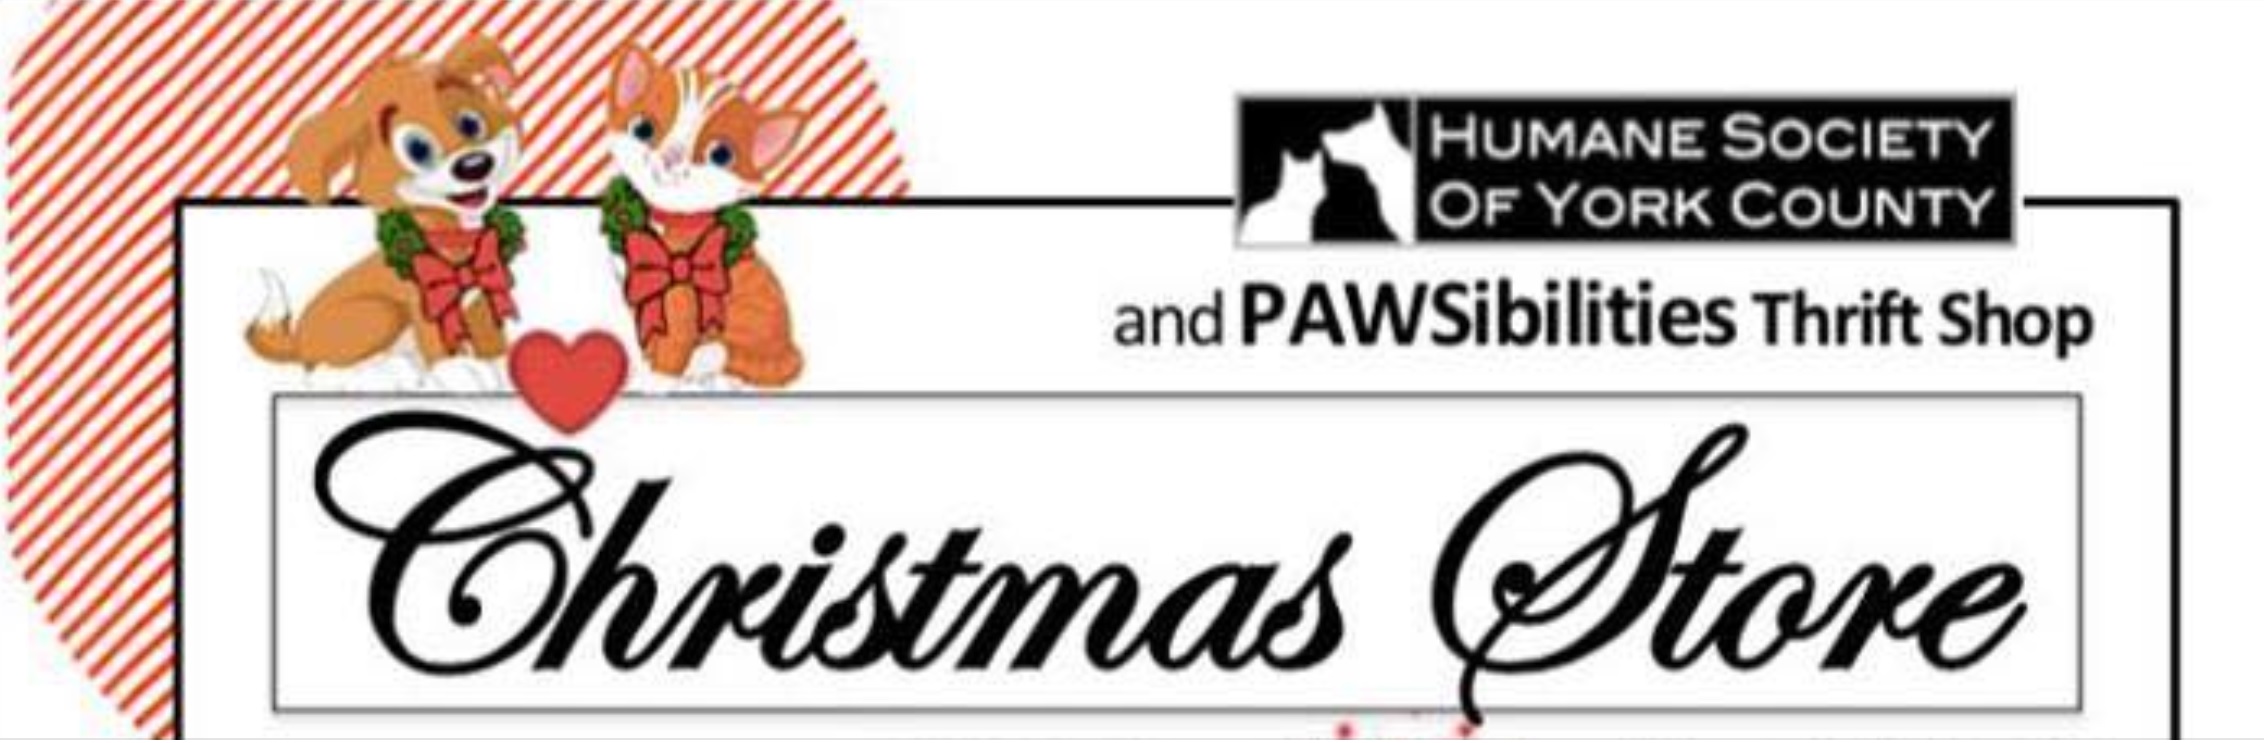 Humane_Society_Of_York_County_Christmas_Store_Banner.jpg